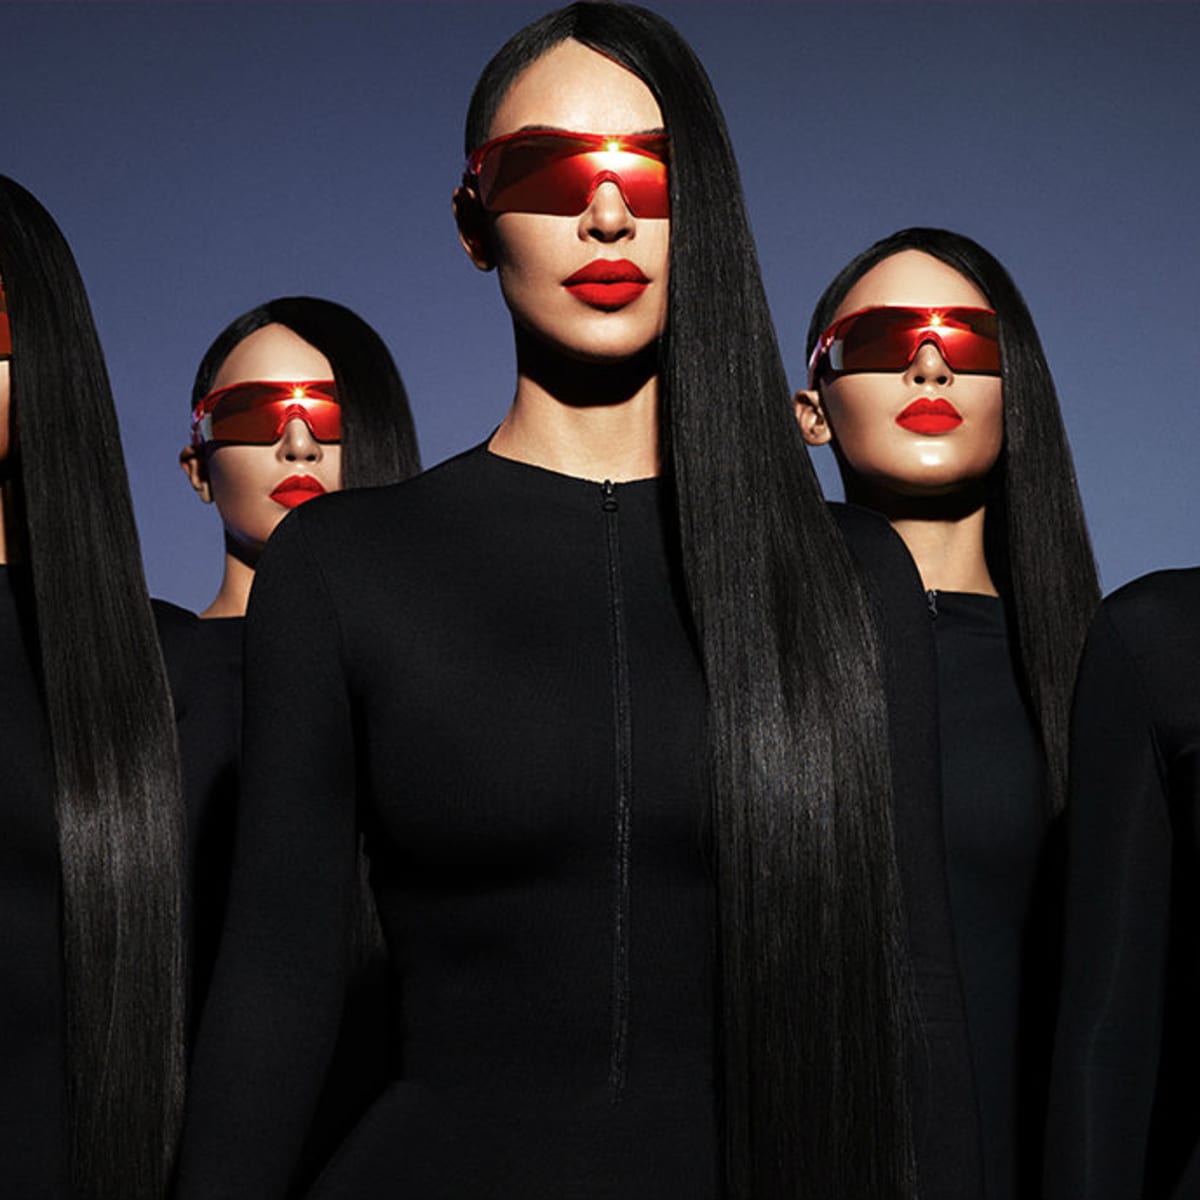 Kim Kardashian and North West rock matching glasses